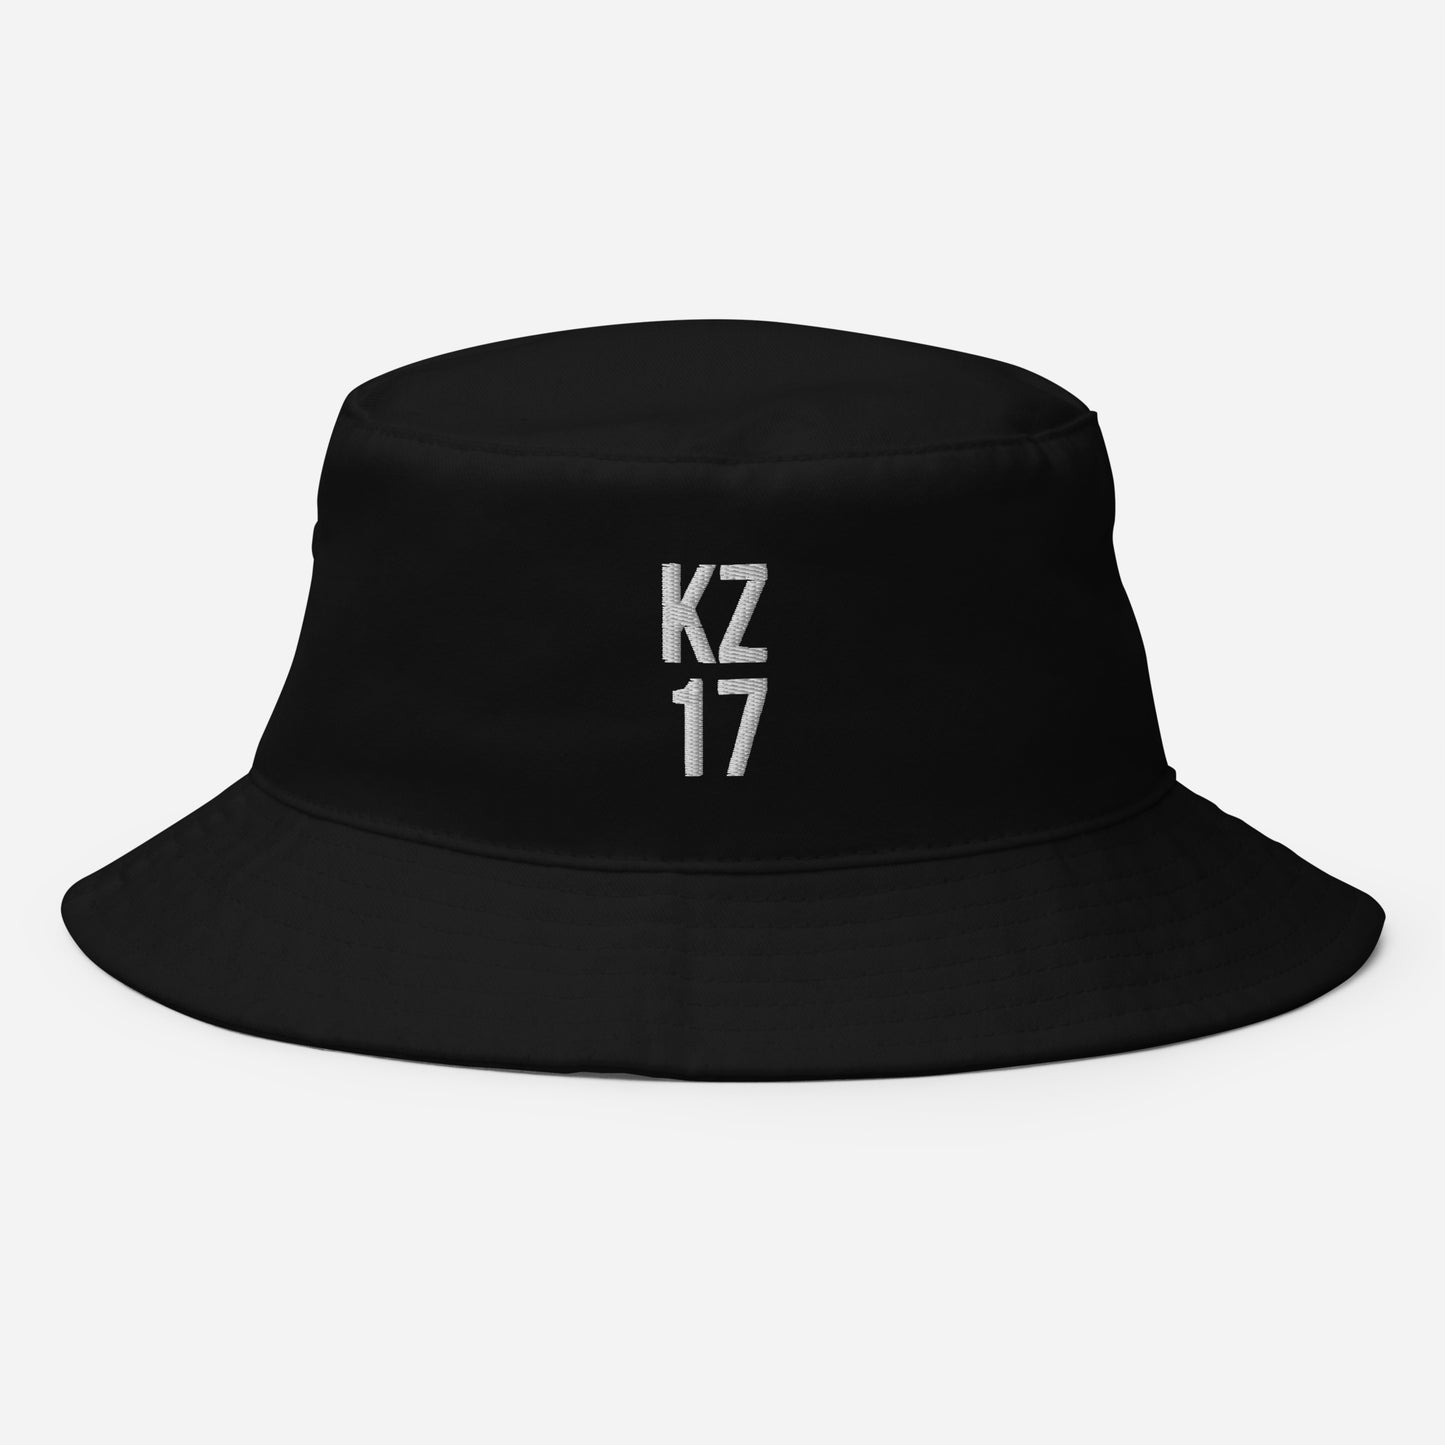 KZ 17 Bucket Hat